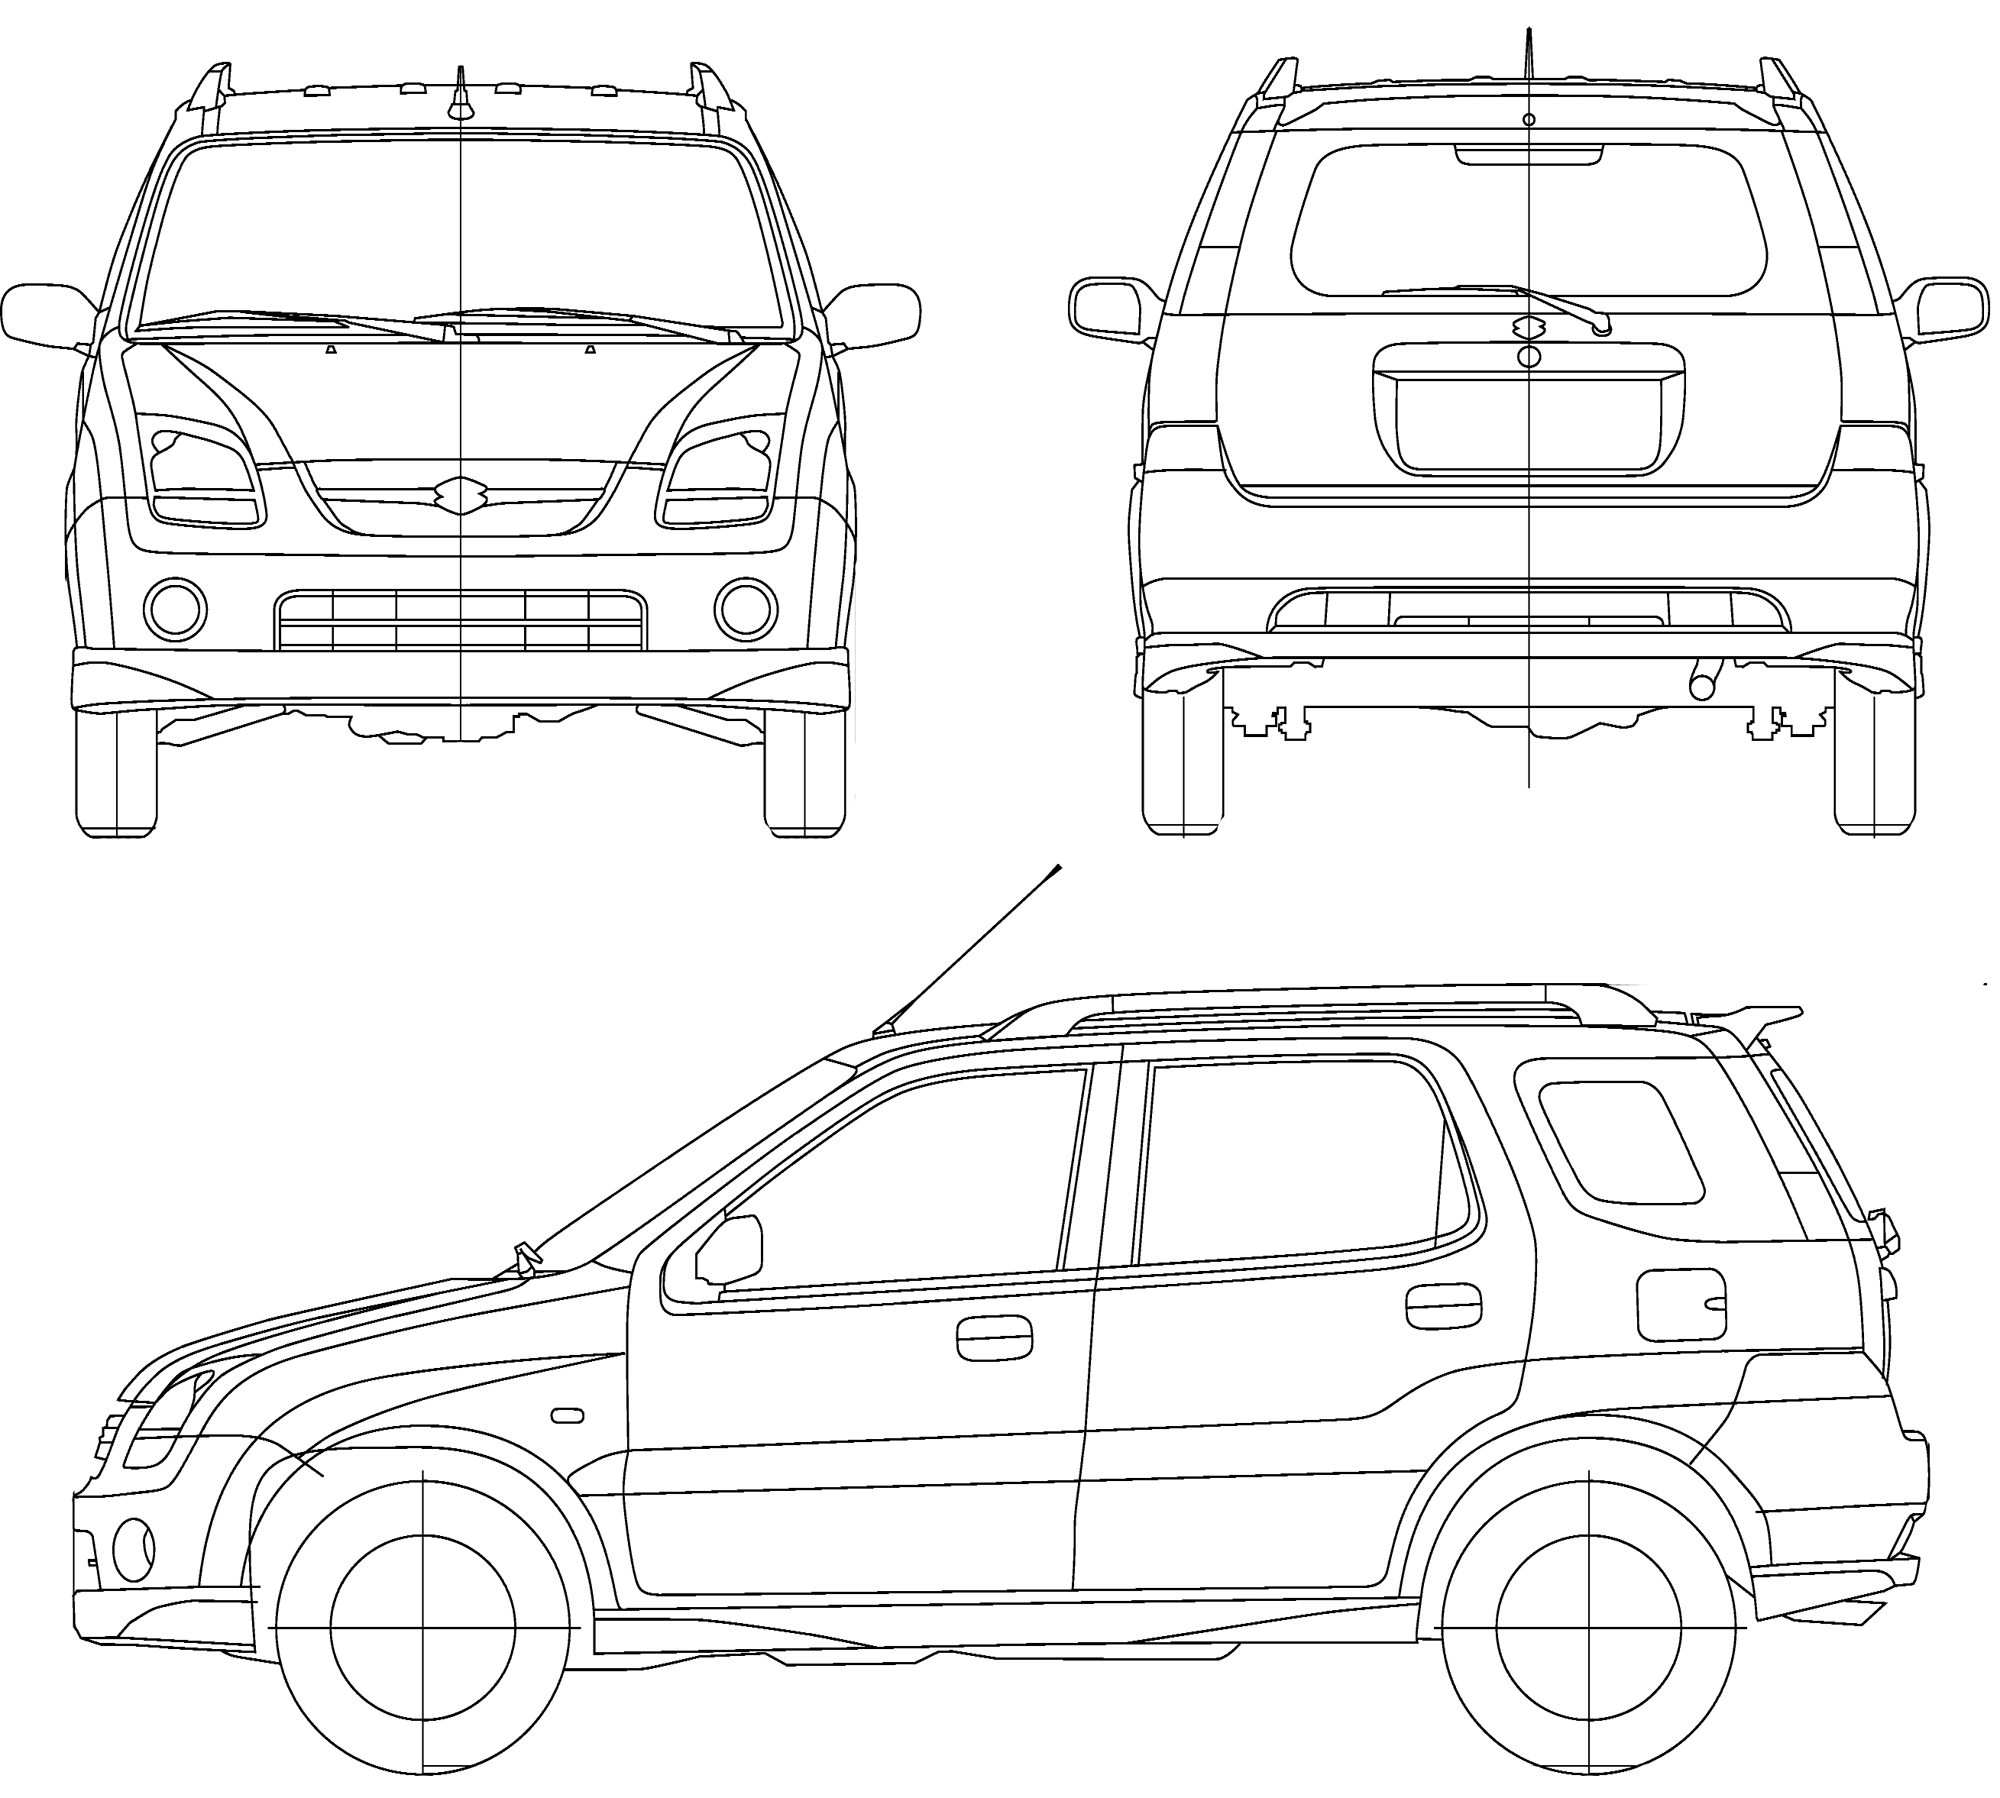 Subaru G3X Justy blueprints